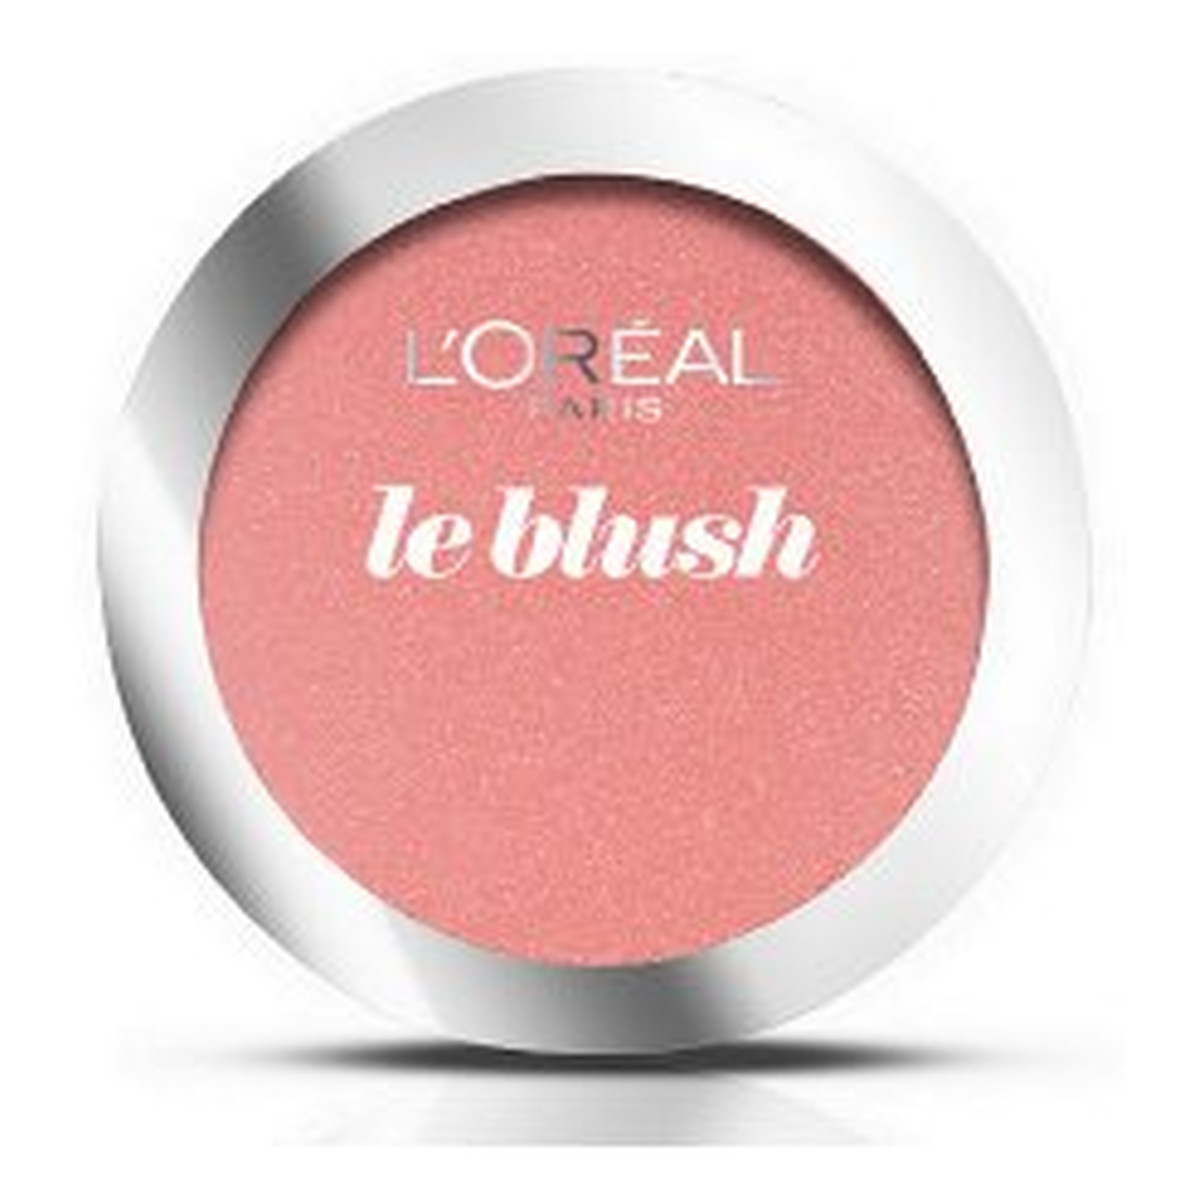 L'Oreal Paris True Match Róż Do Policzków Blush Blush Rosewood (145) 8ml